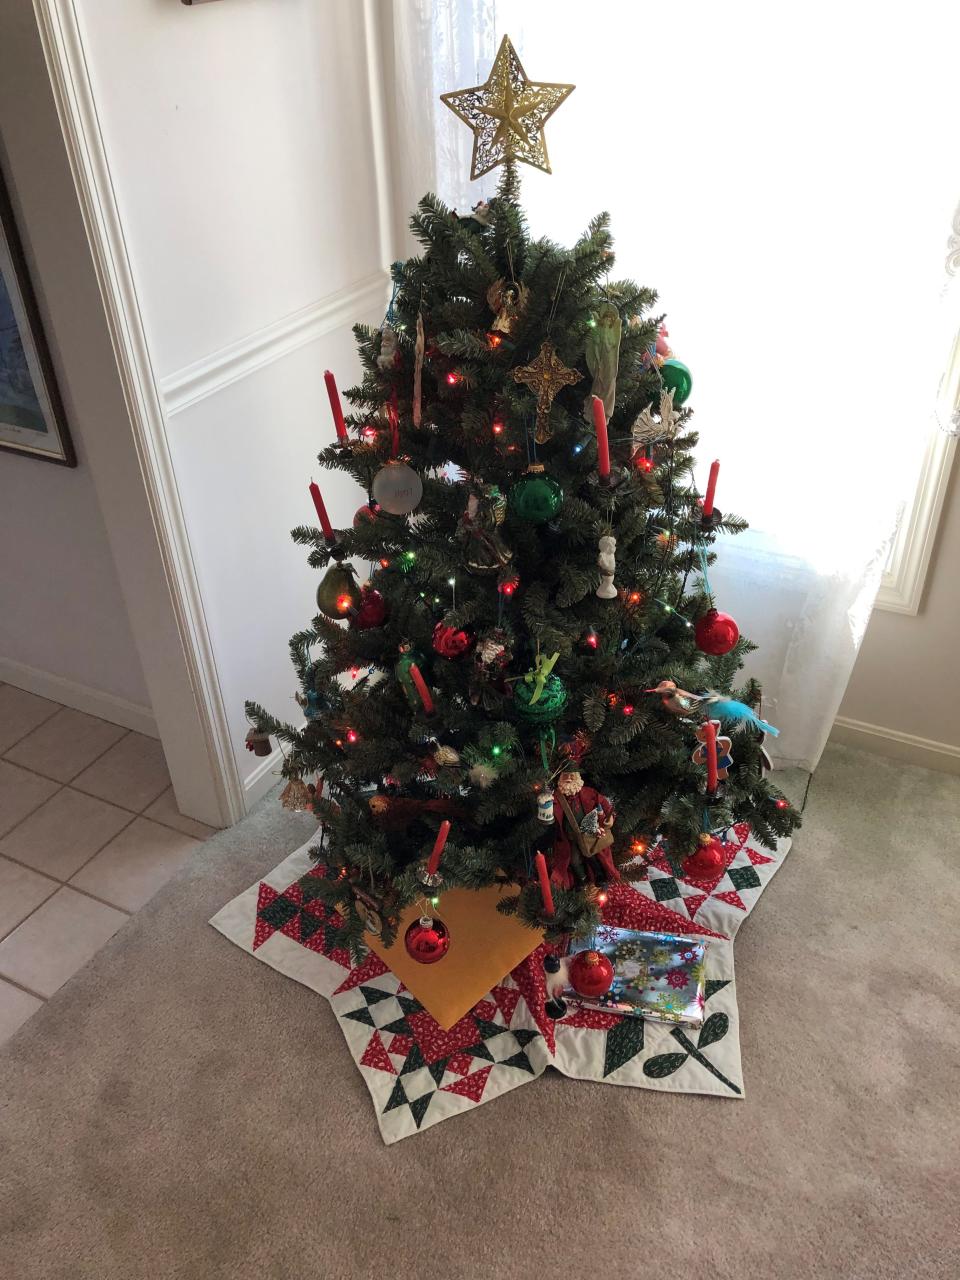 A German-style Christmas tree